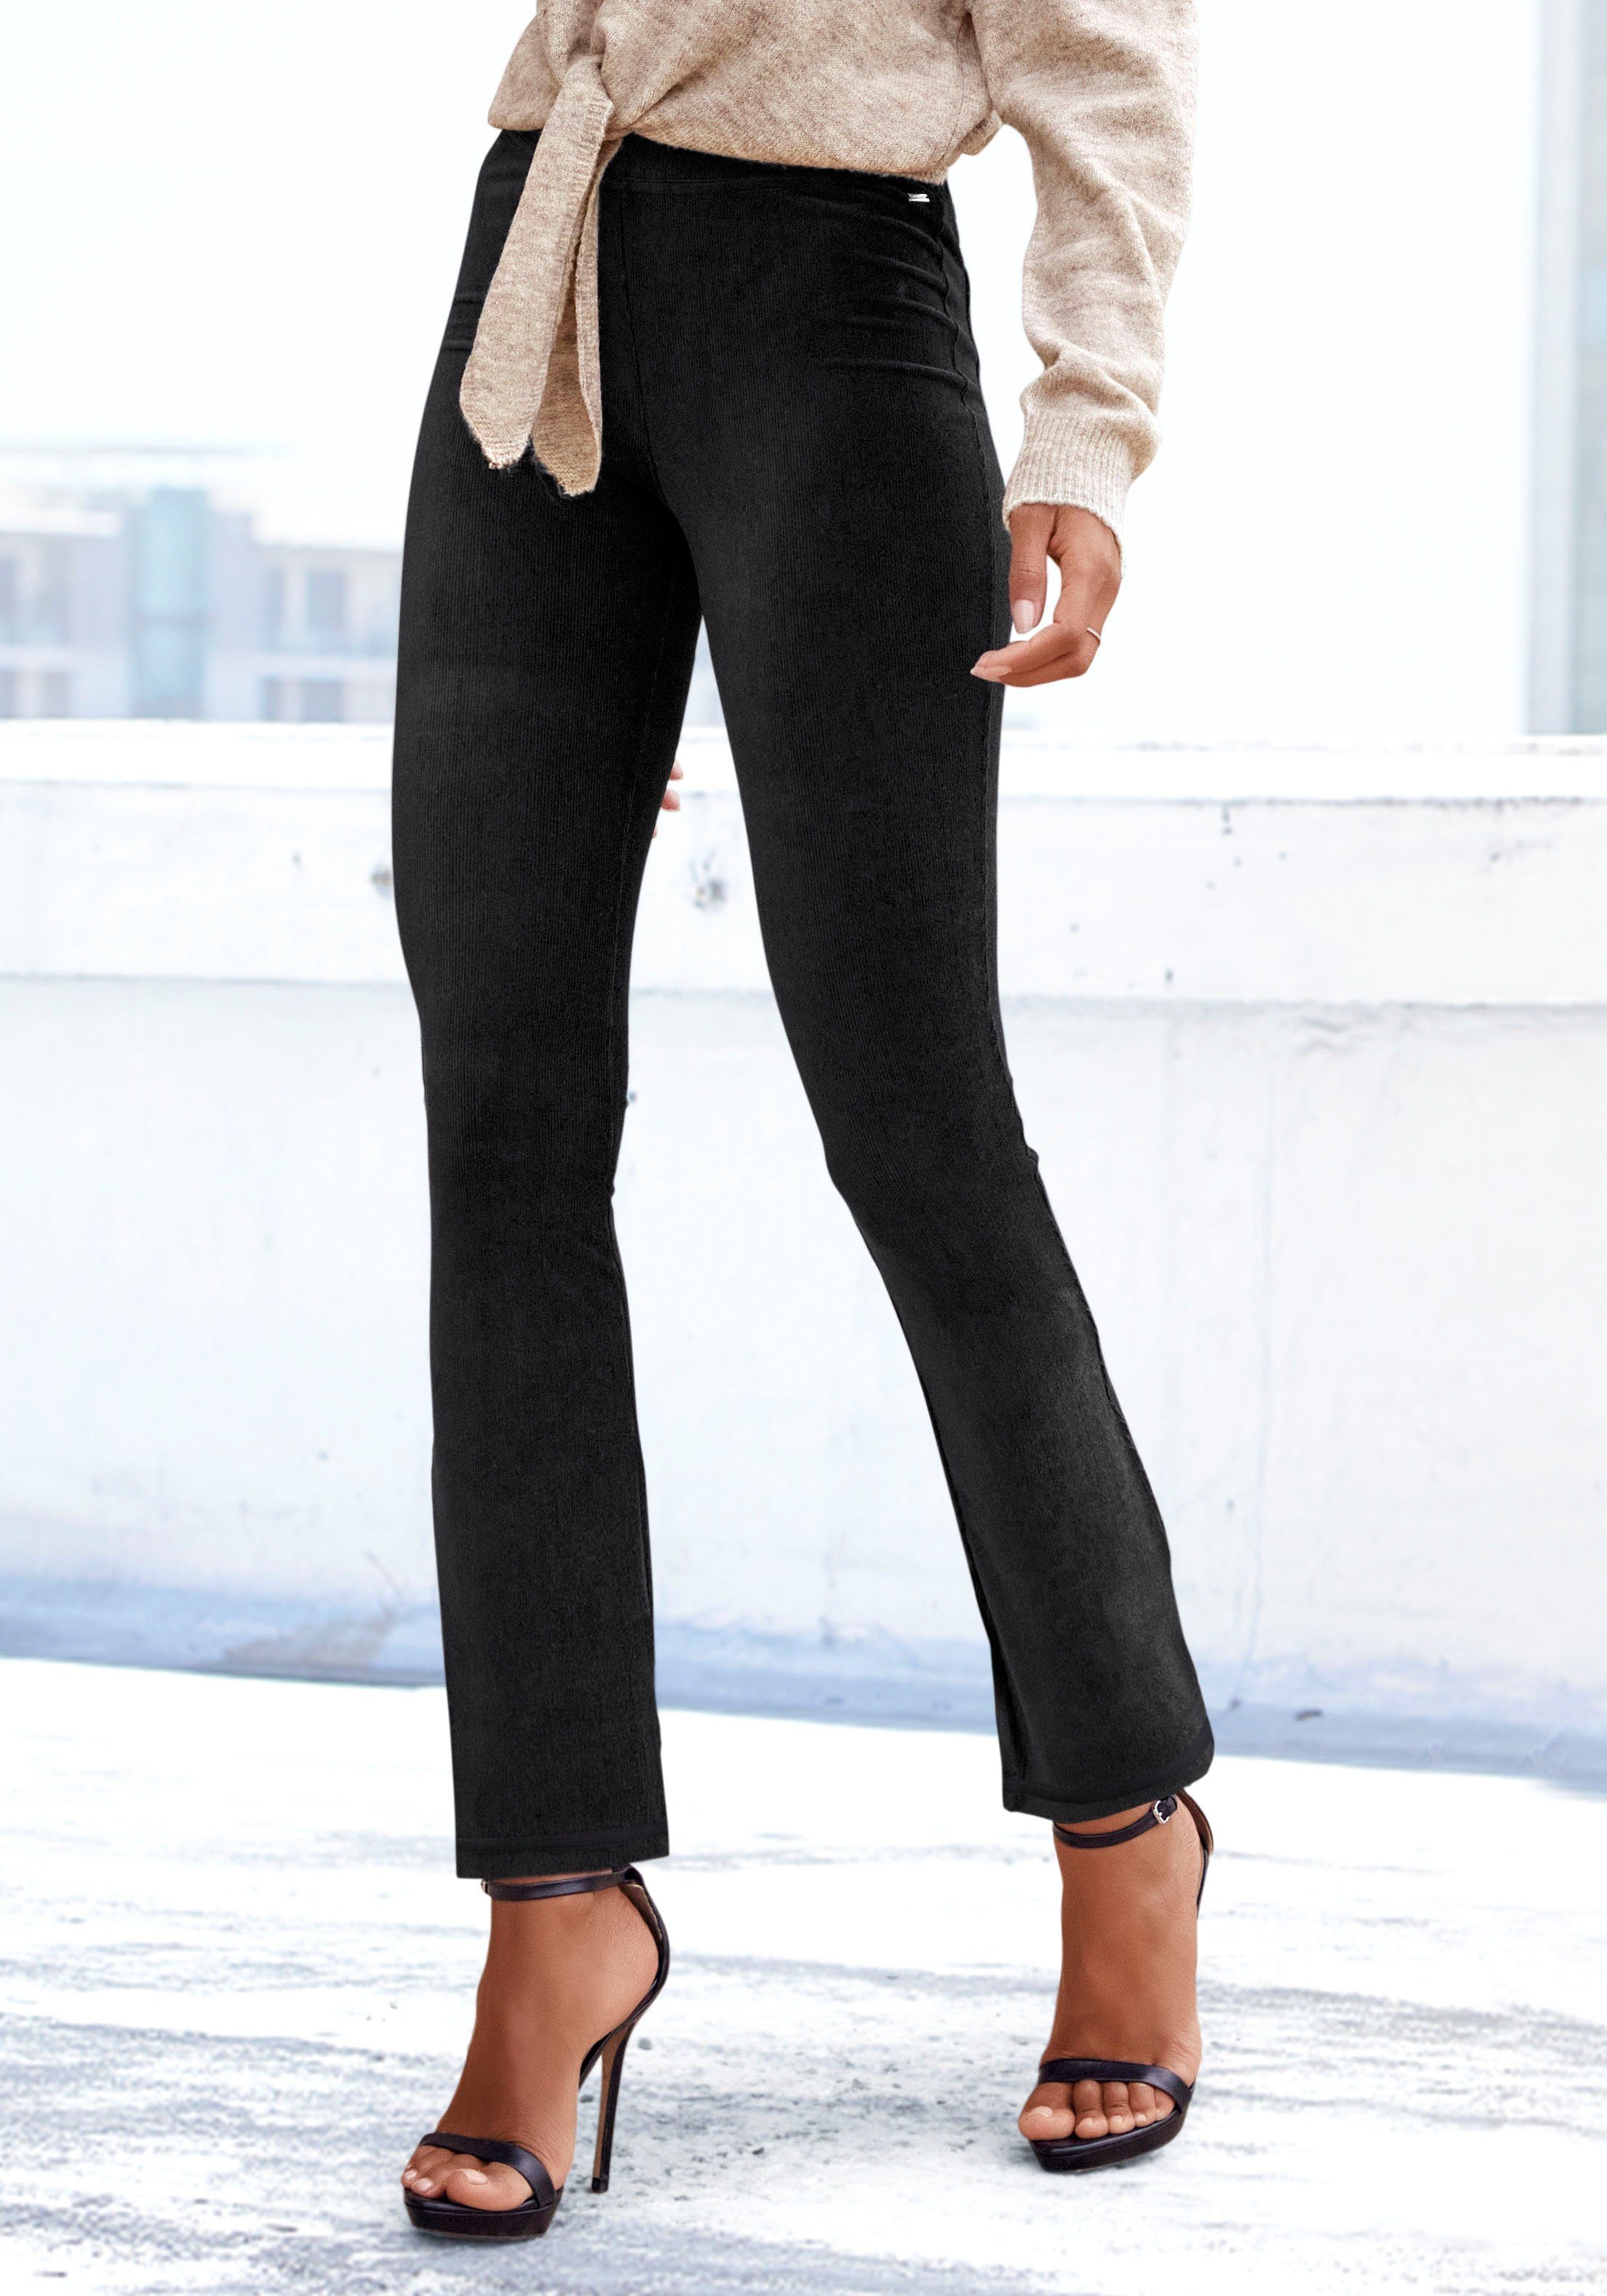 LASCANA Jazzpants aus weichem Material in Cord-Optik, Loungewear schwarz